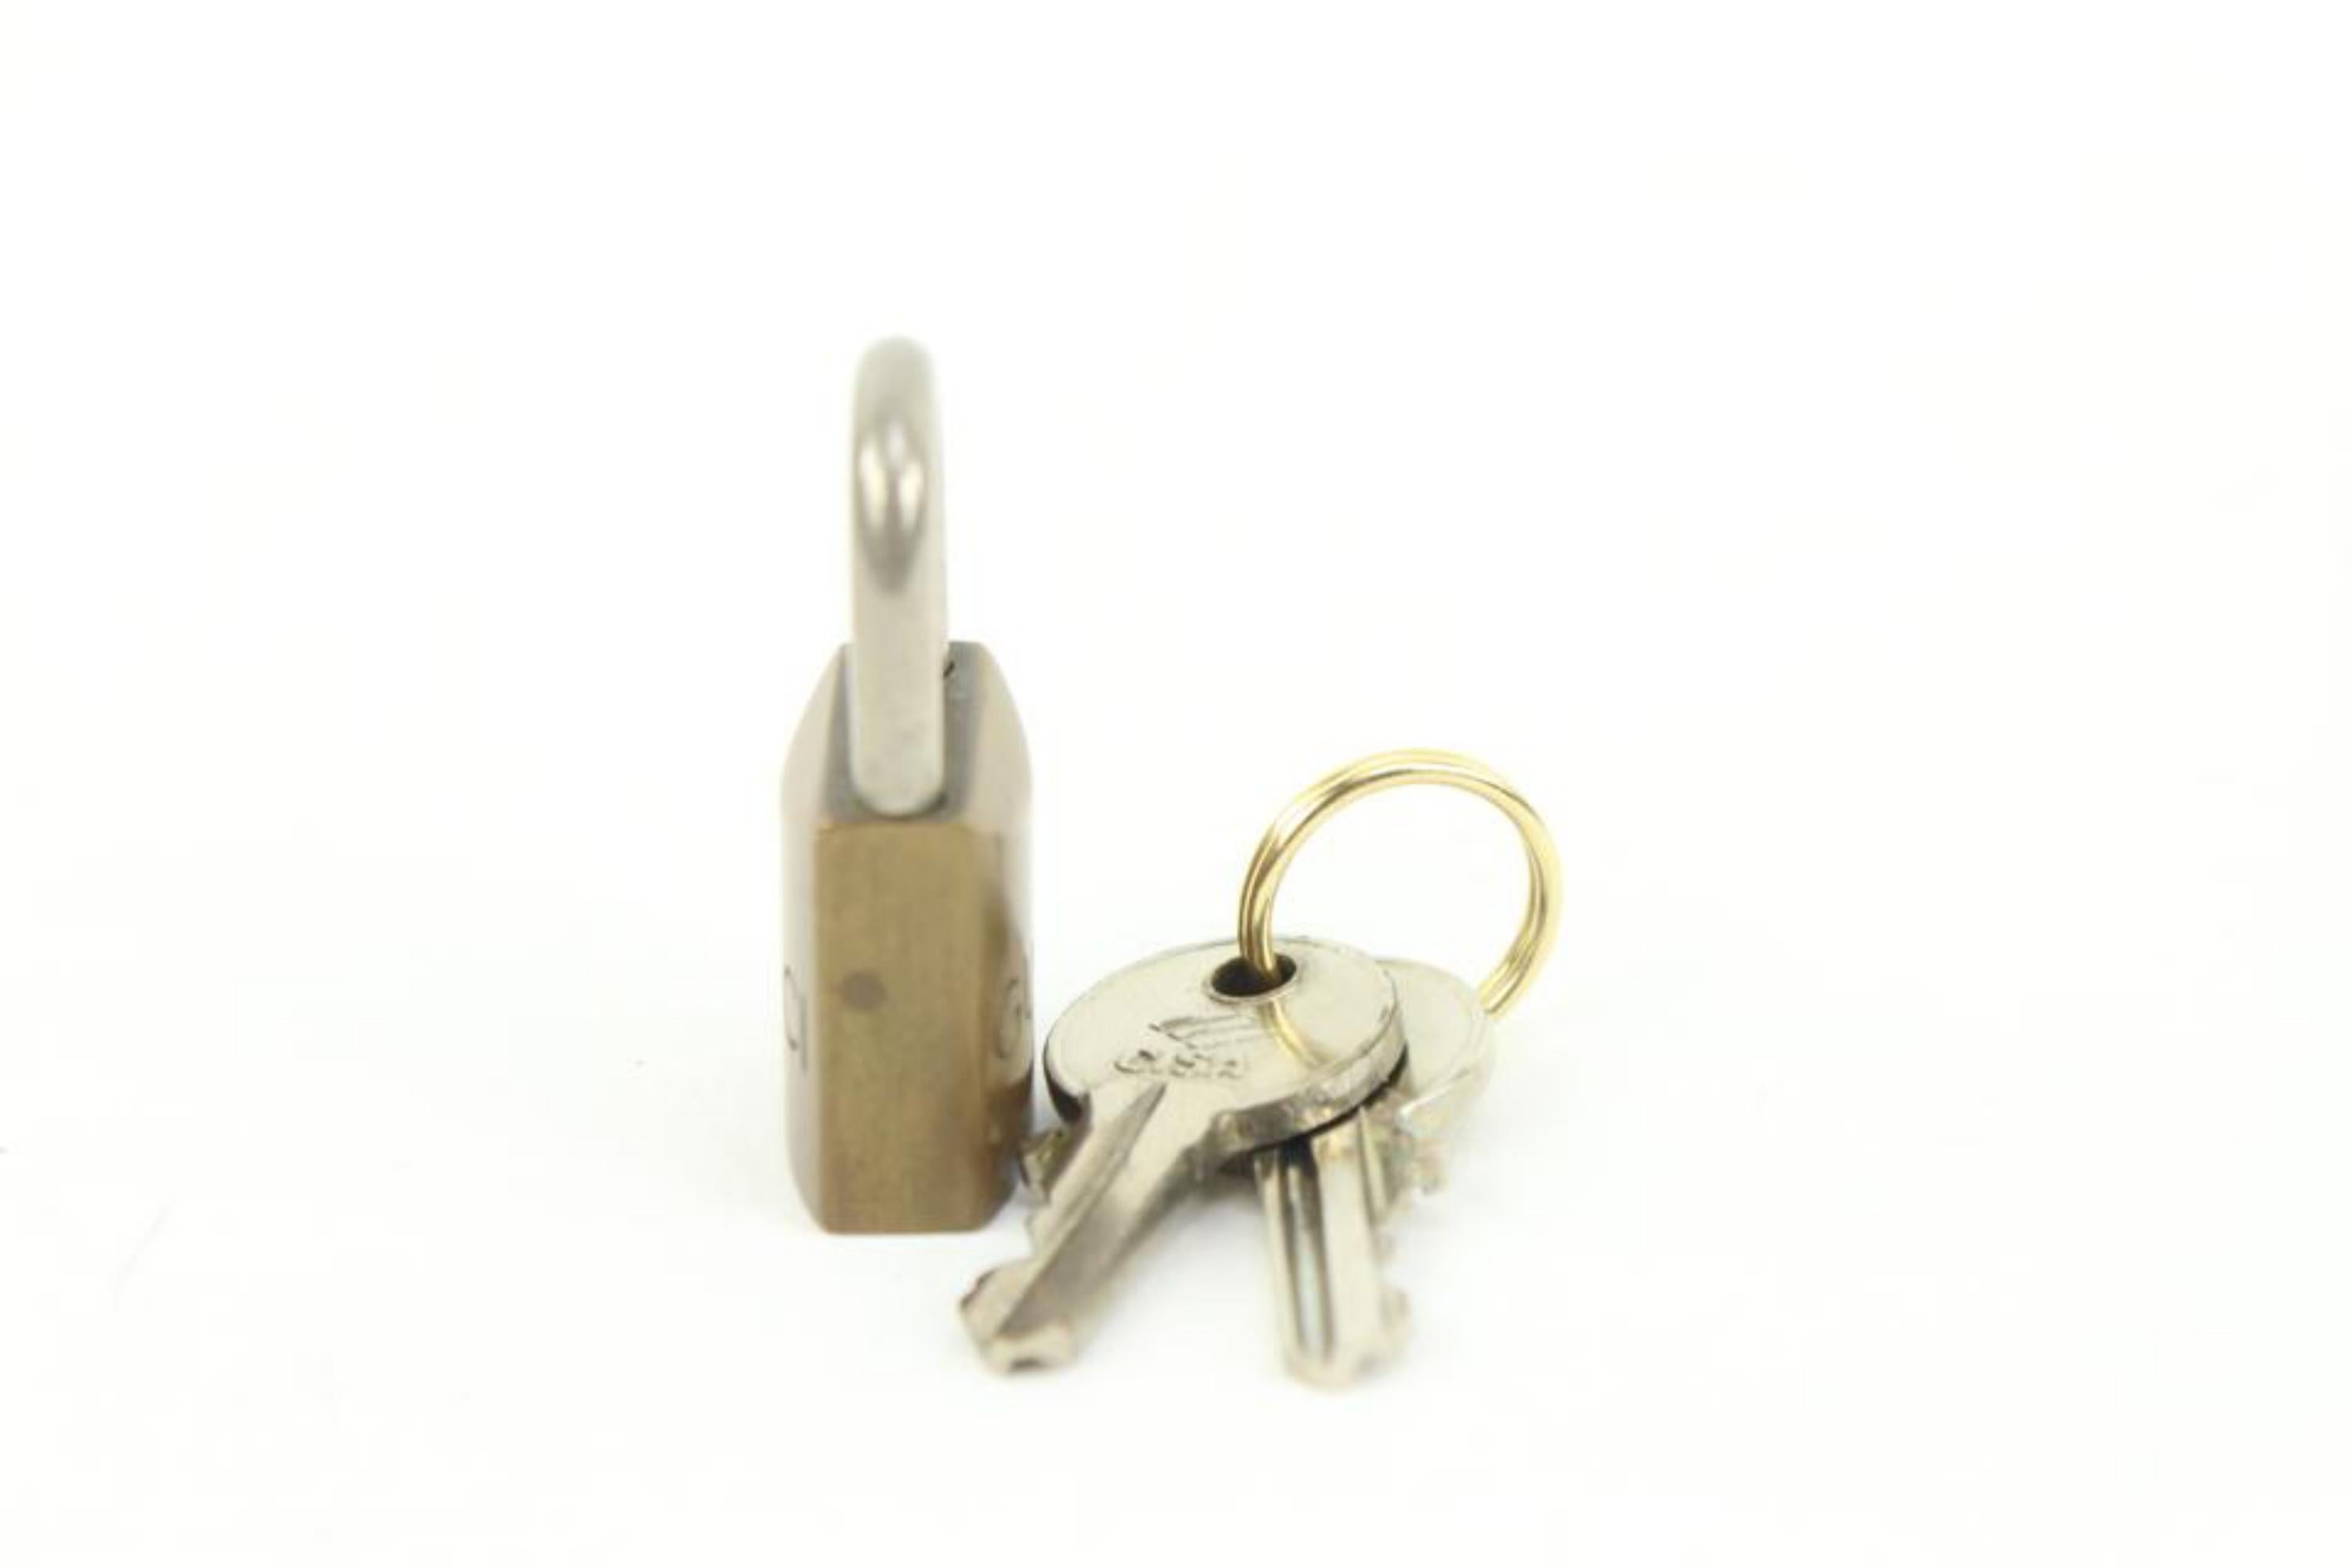 Gucci Vintage Brass Lock and Key Set Cadena Padlock Bag Charm 17g34s 3